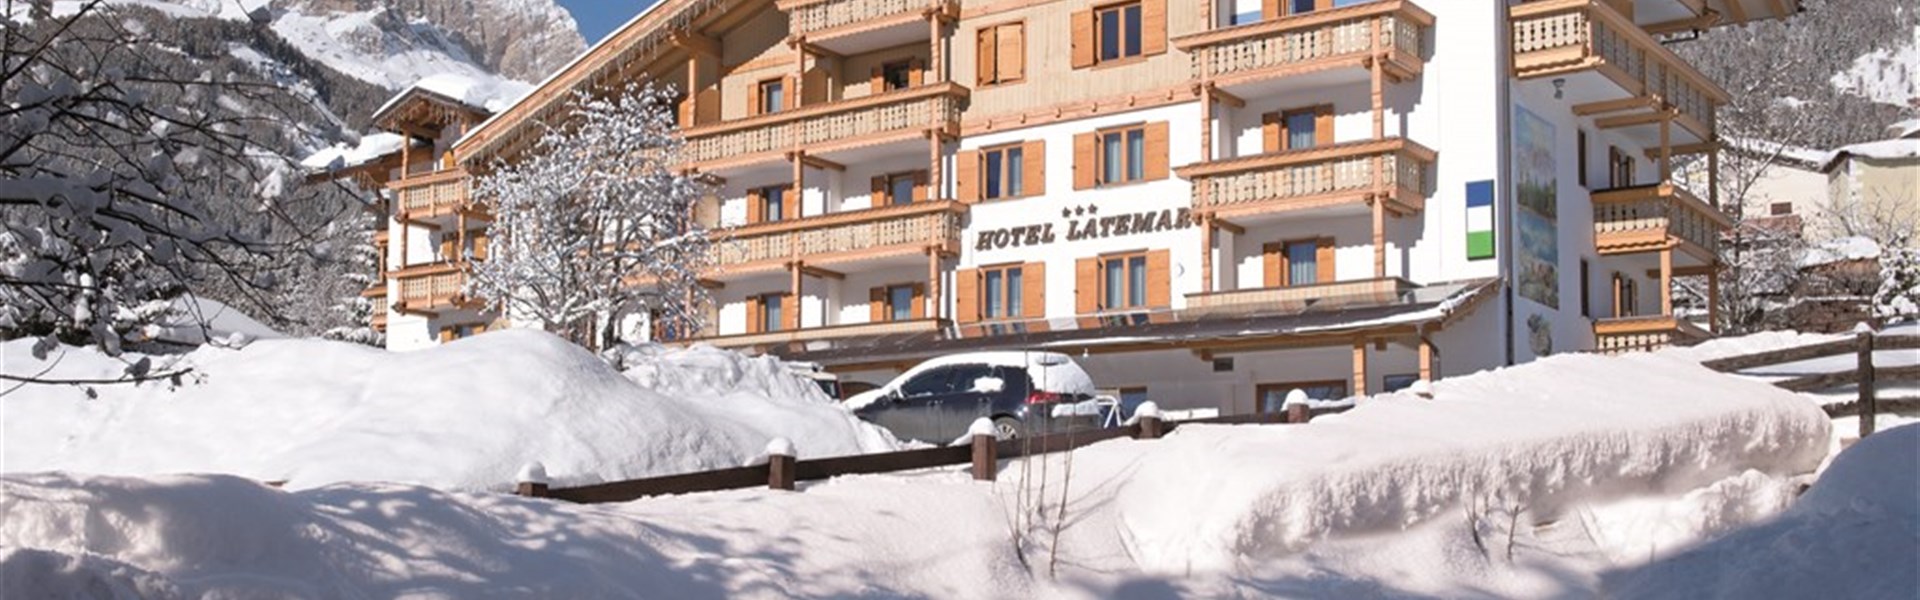 Hotel Latemar - 